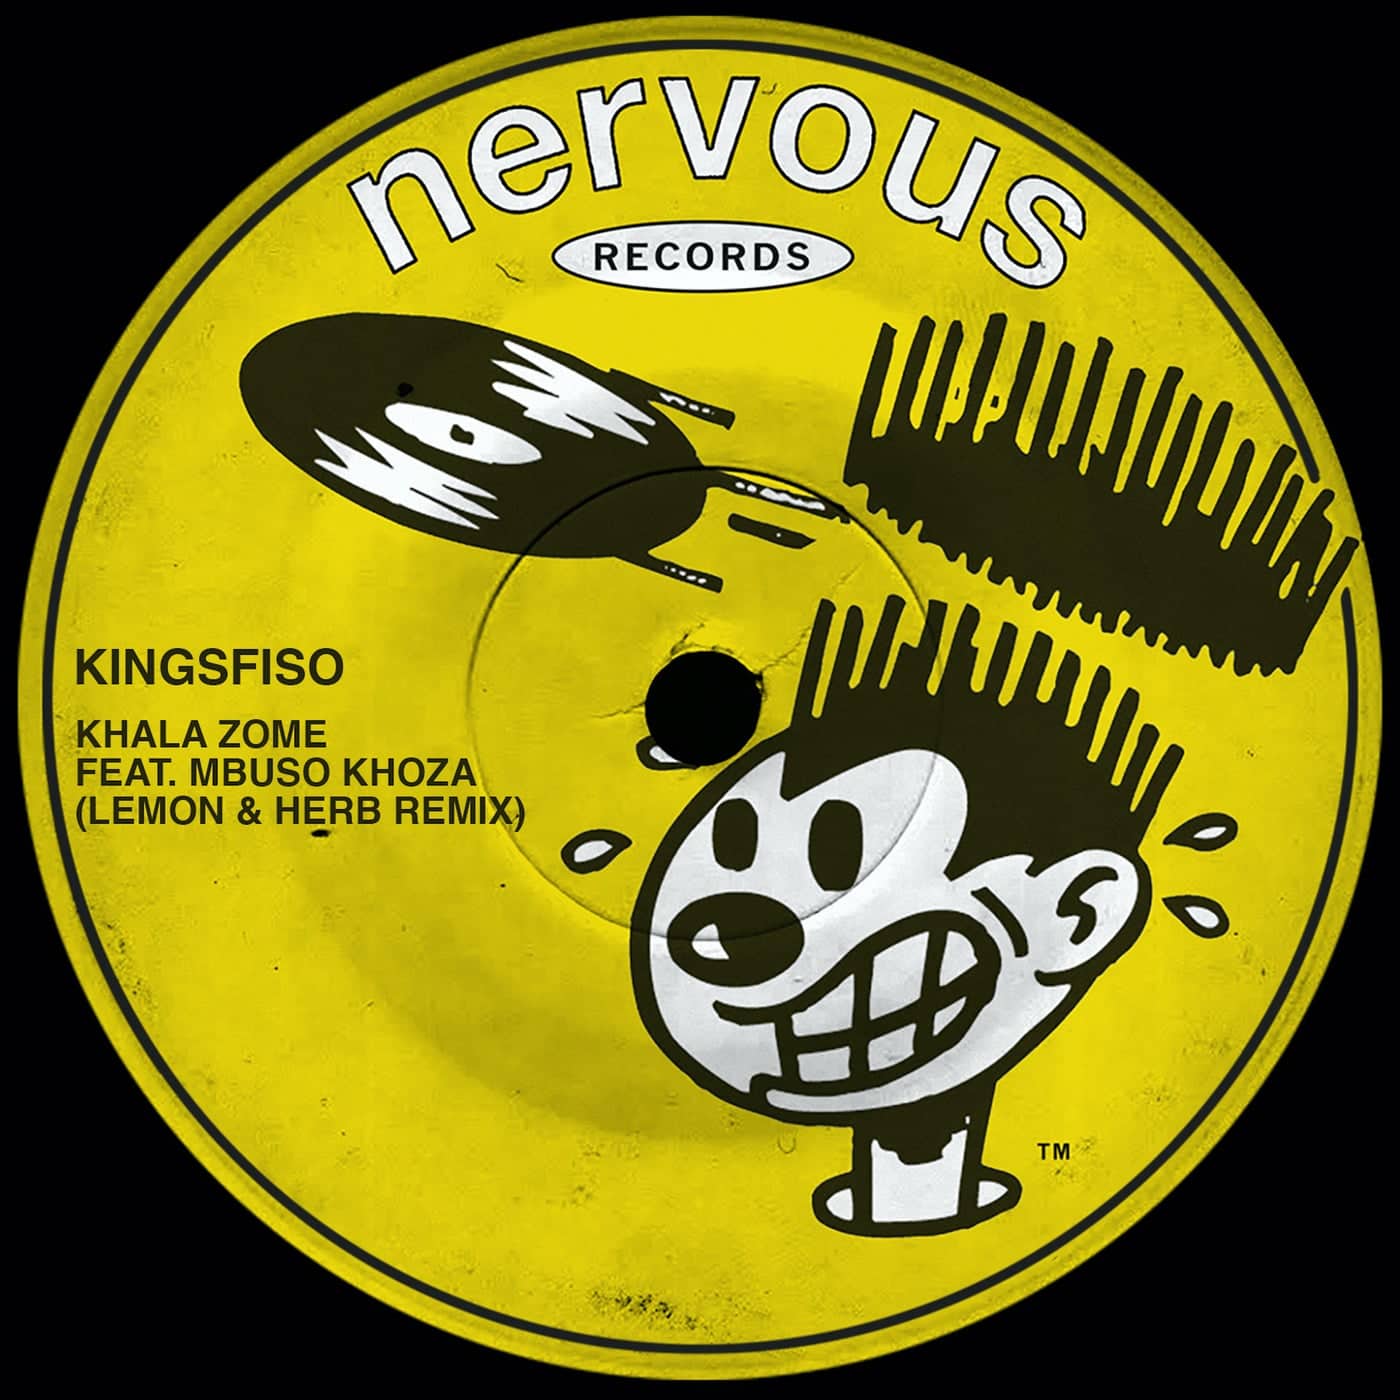 image cover: KingSfiso - Khala Zome feat. Mbuso Khoza (Lemon & Herb Remix) / Nervous Records